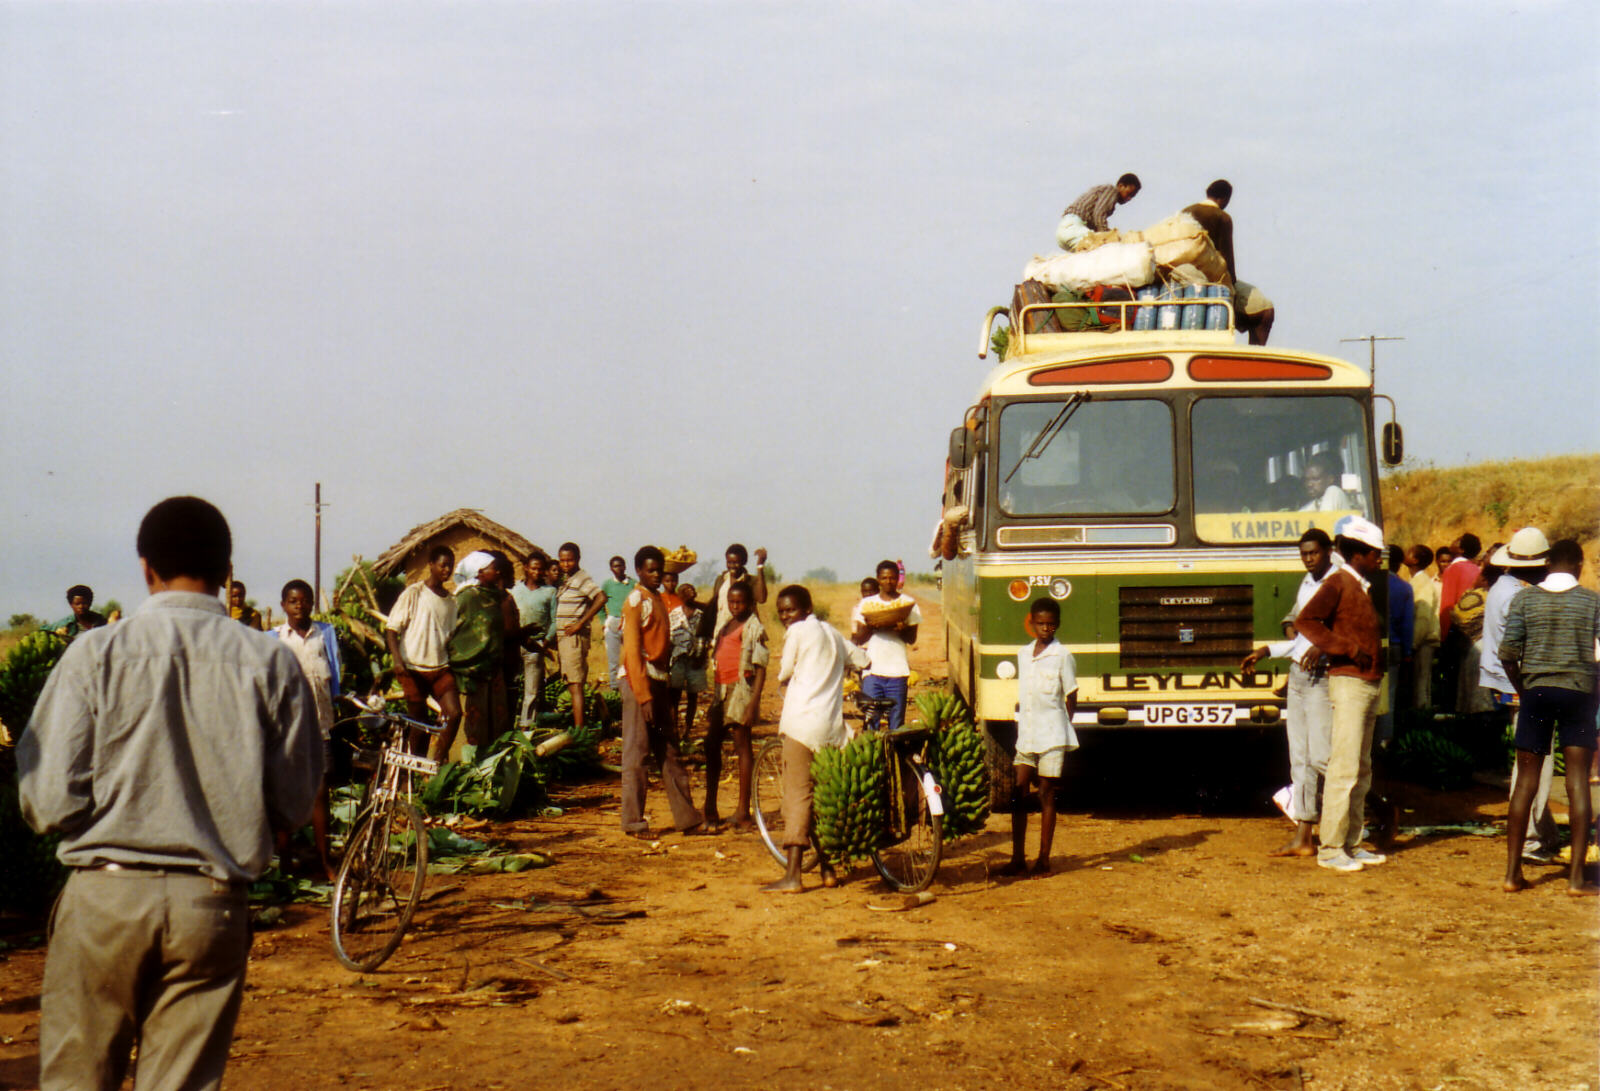 The bus from Kabale to Kampala, Uganda